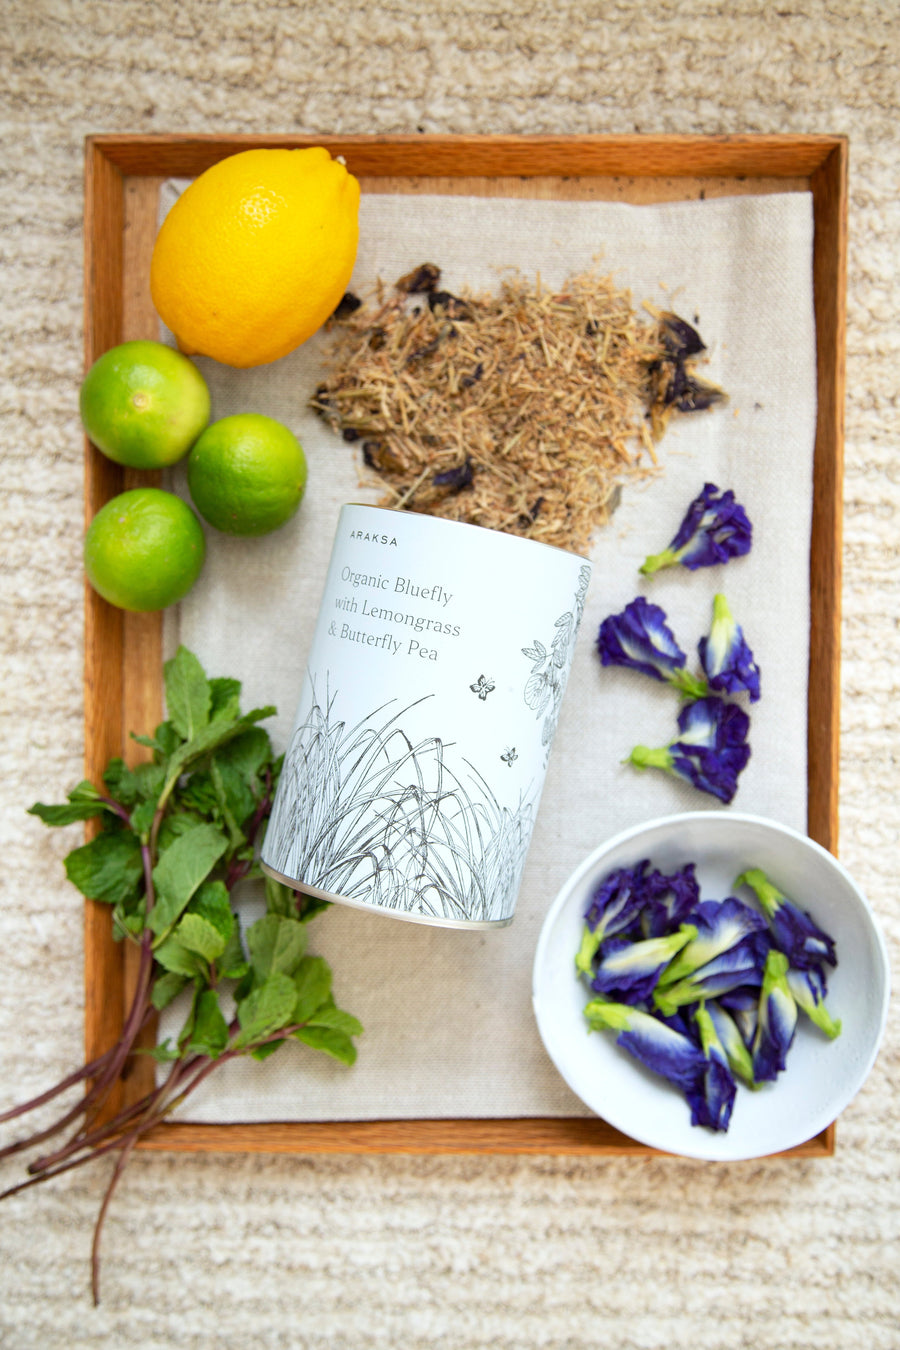 Organic Bluefly Tea